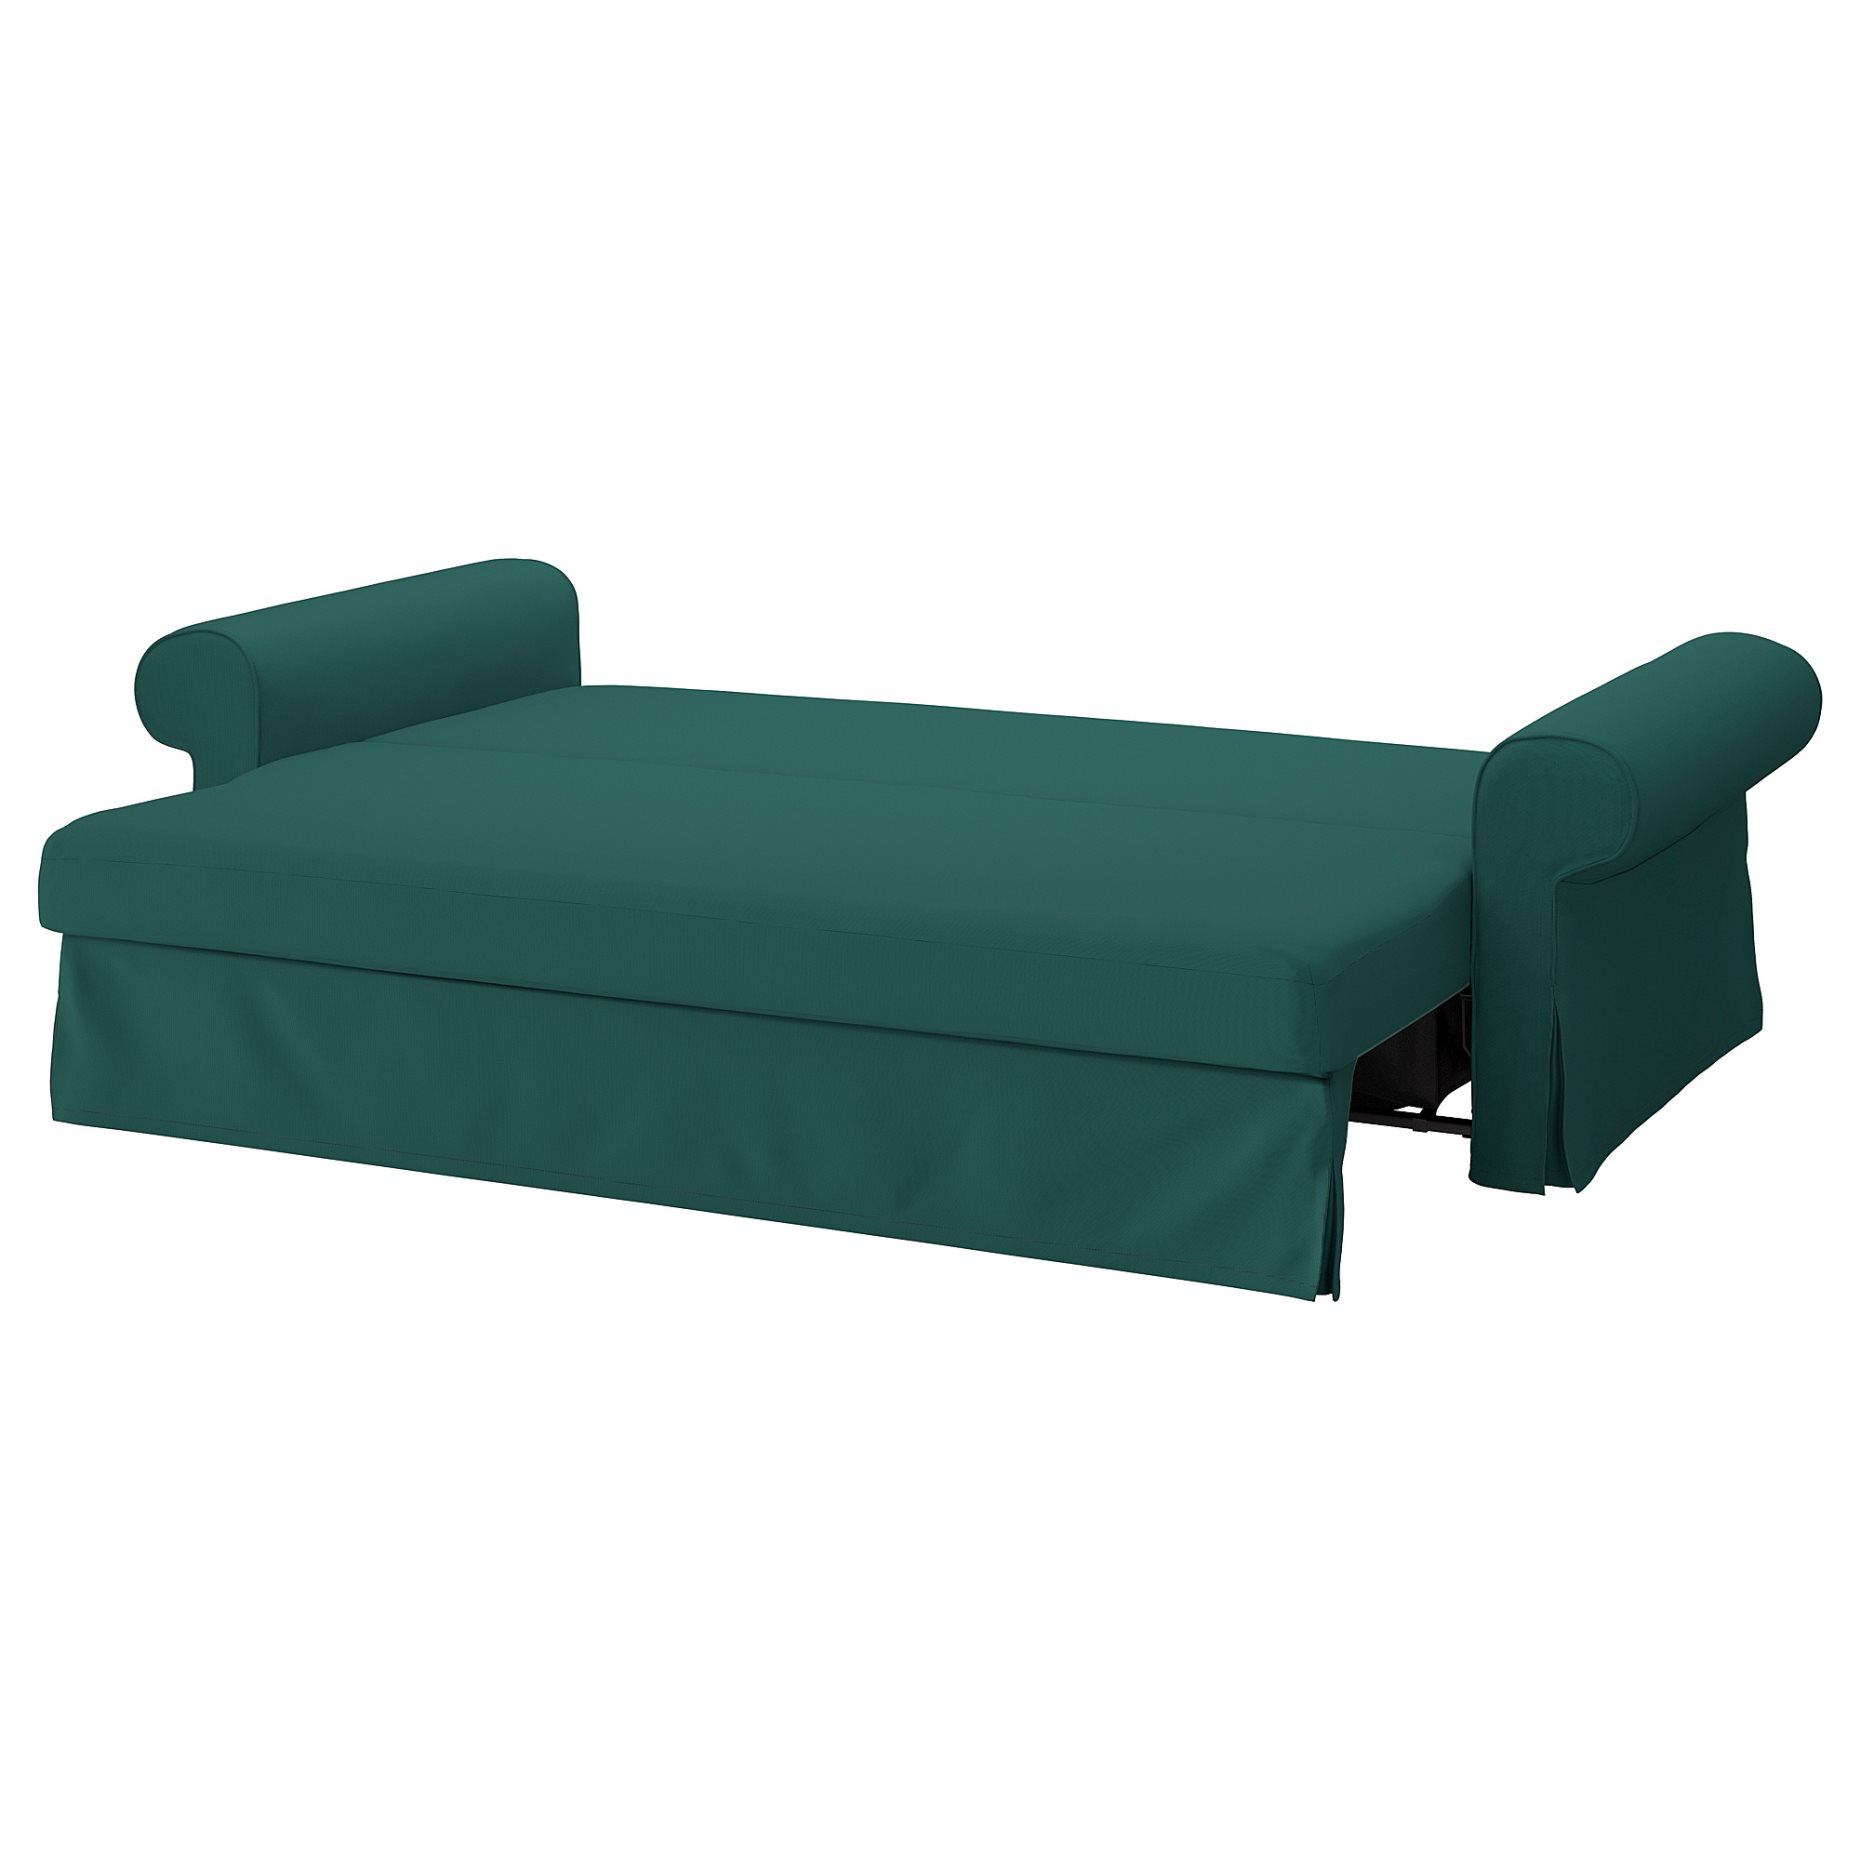 VRETSTORP, τριθέσιος καναπές-κρεβάτι, 593.201.08